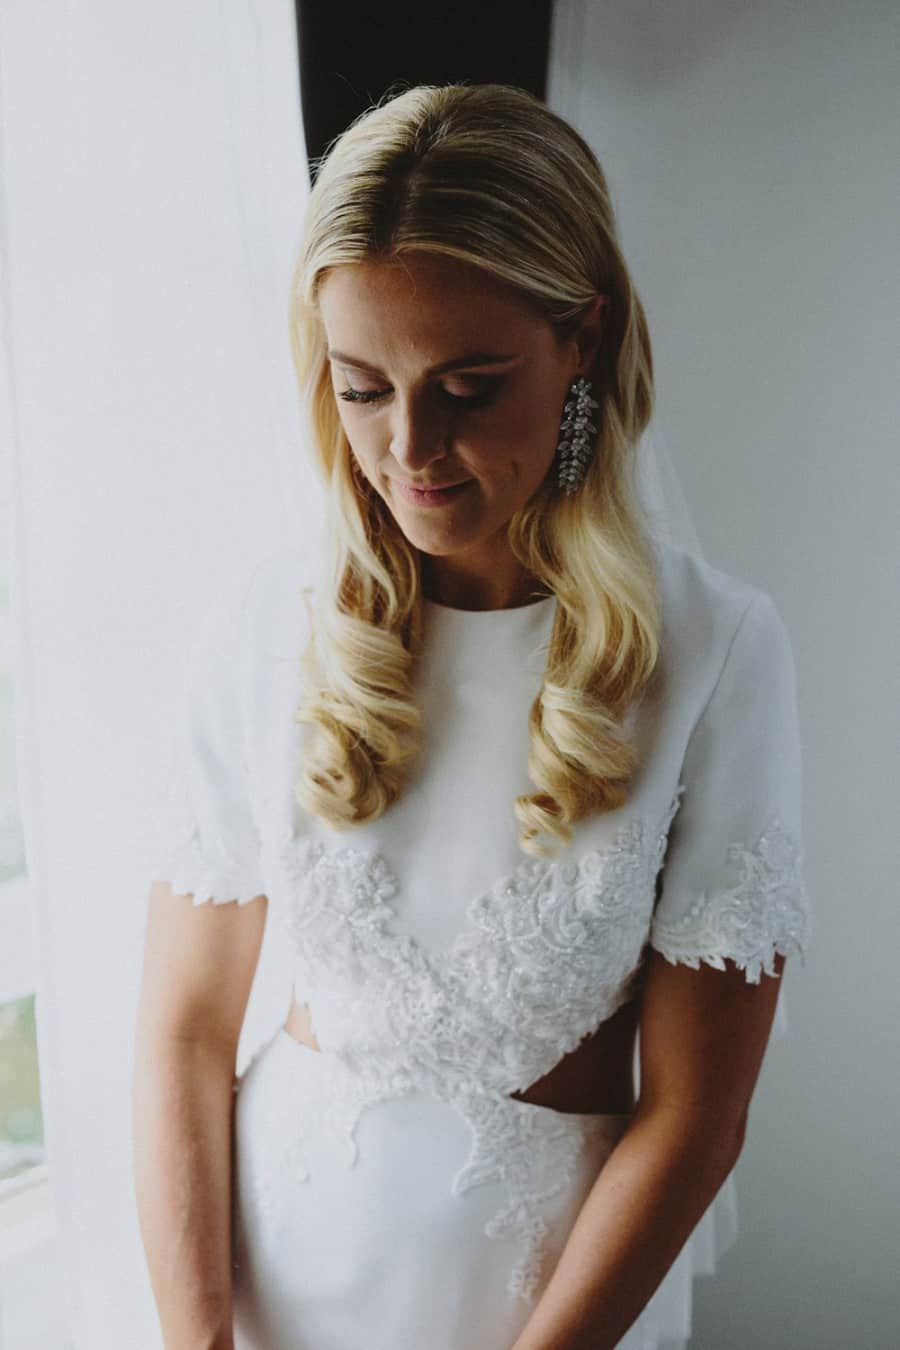 Best wedding dresses 2016 - modern dress with bodice cutout